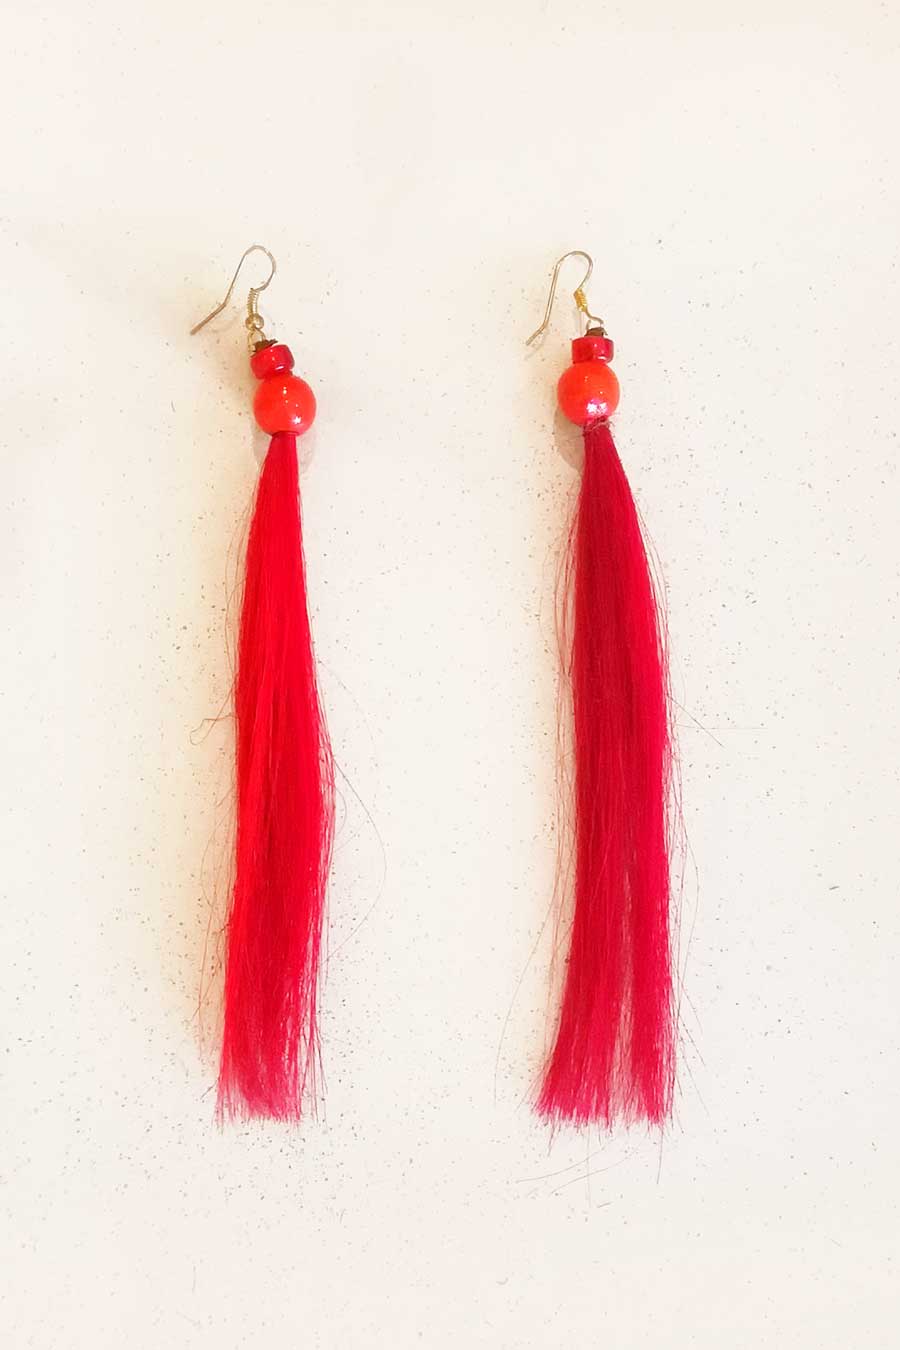 Festive Red Tassel Earrings | Jewelry | Red | Gift, Indian, Handmade